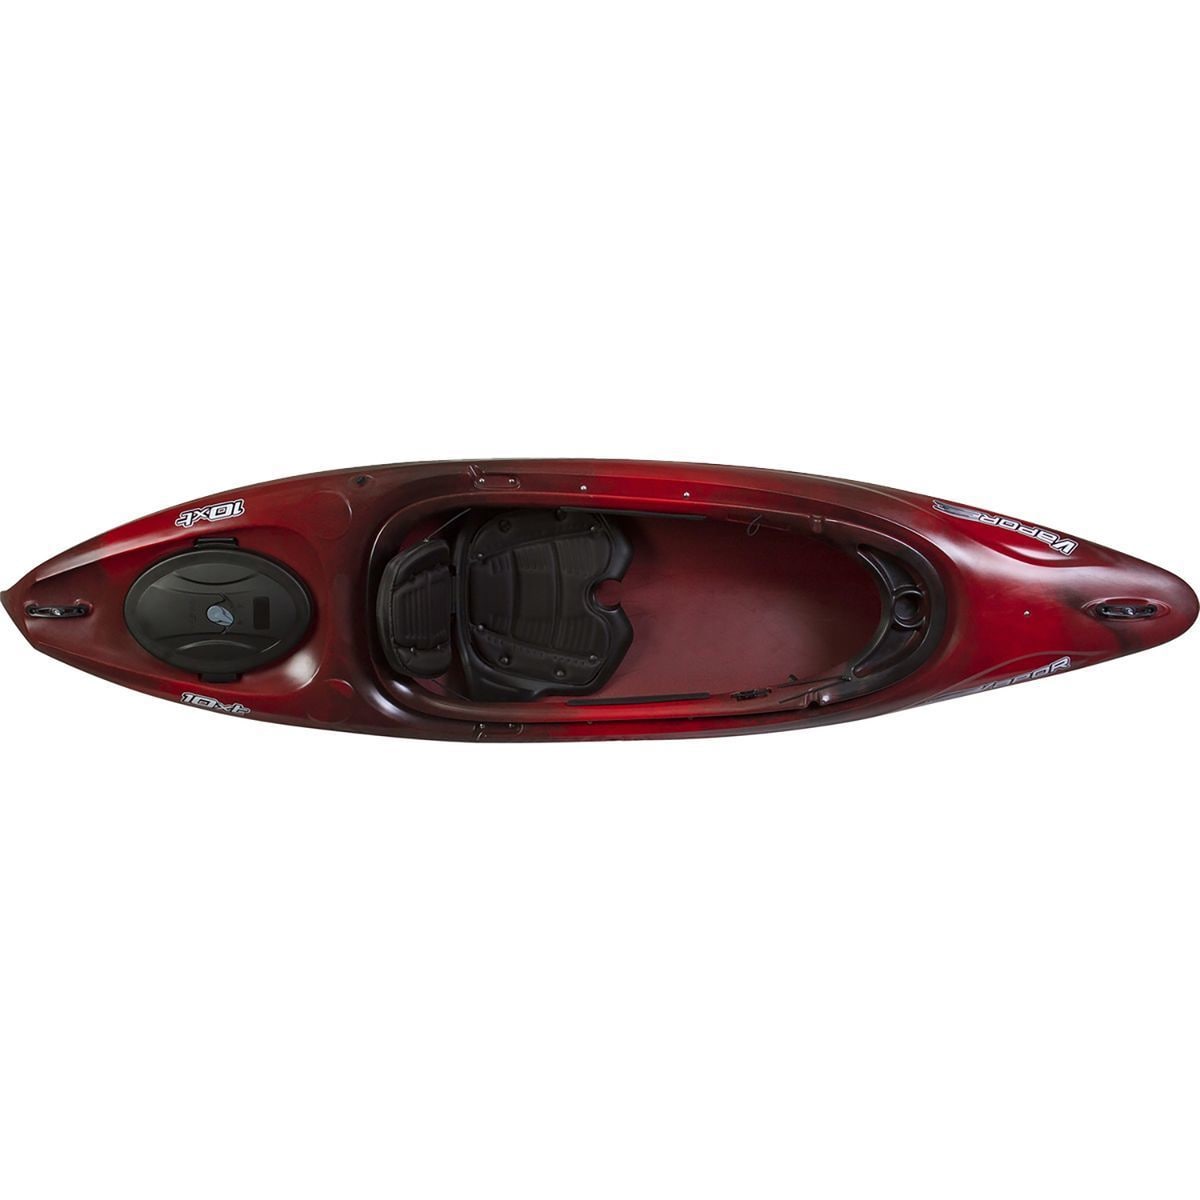 Color:Black Cherry:Old Town Vapor 10XT Kayak